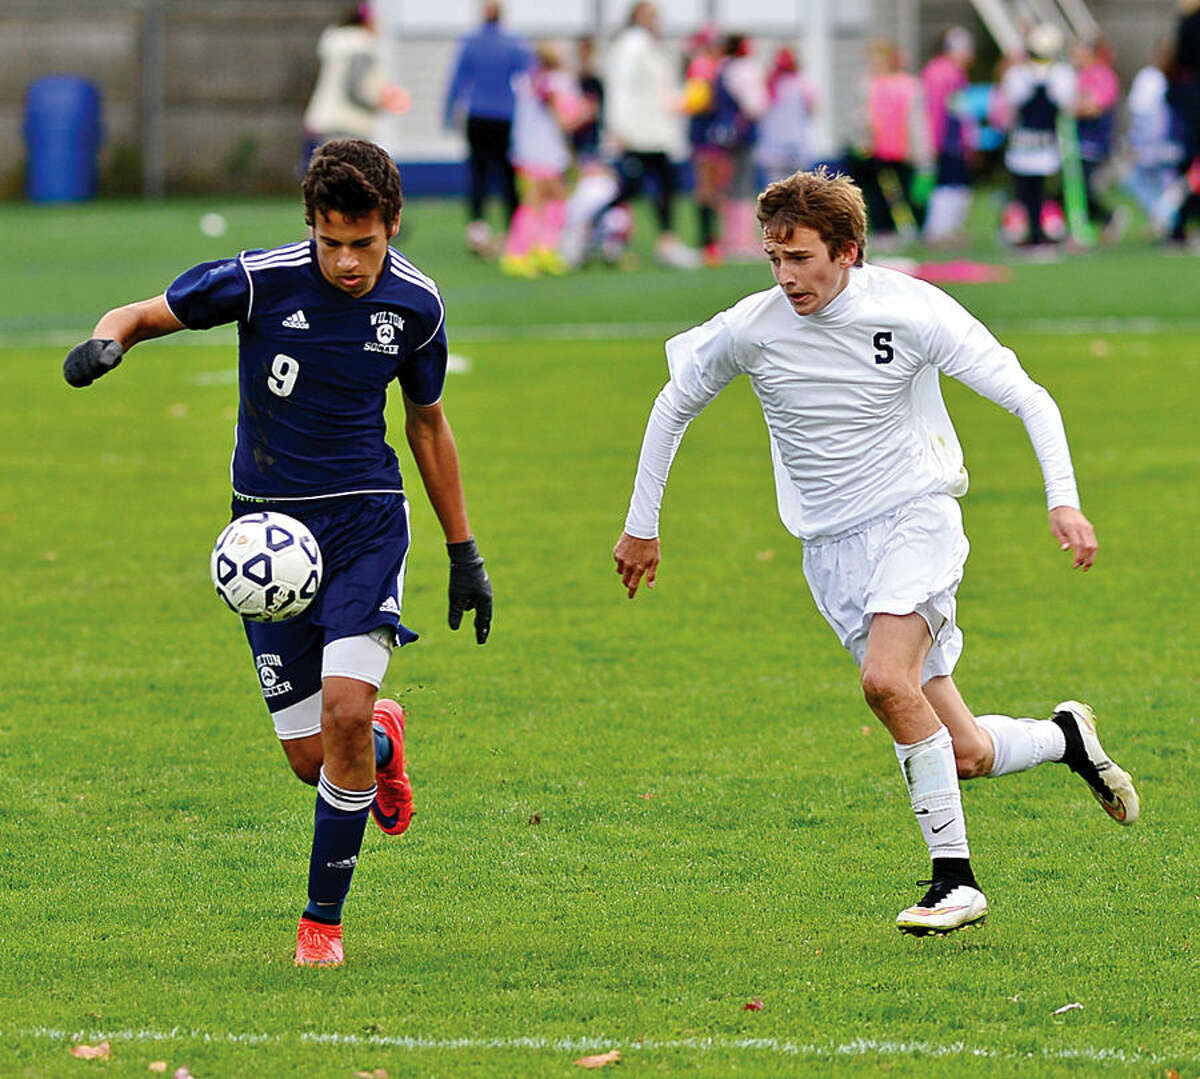 Hour photo / Erik Trautmann Staples High School # takes on Wilton in boys soccer Saturday in Westport.